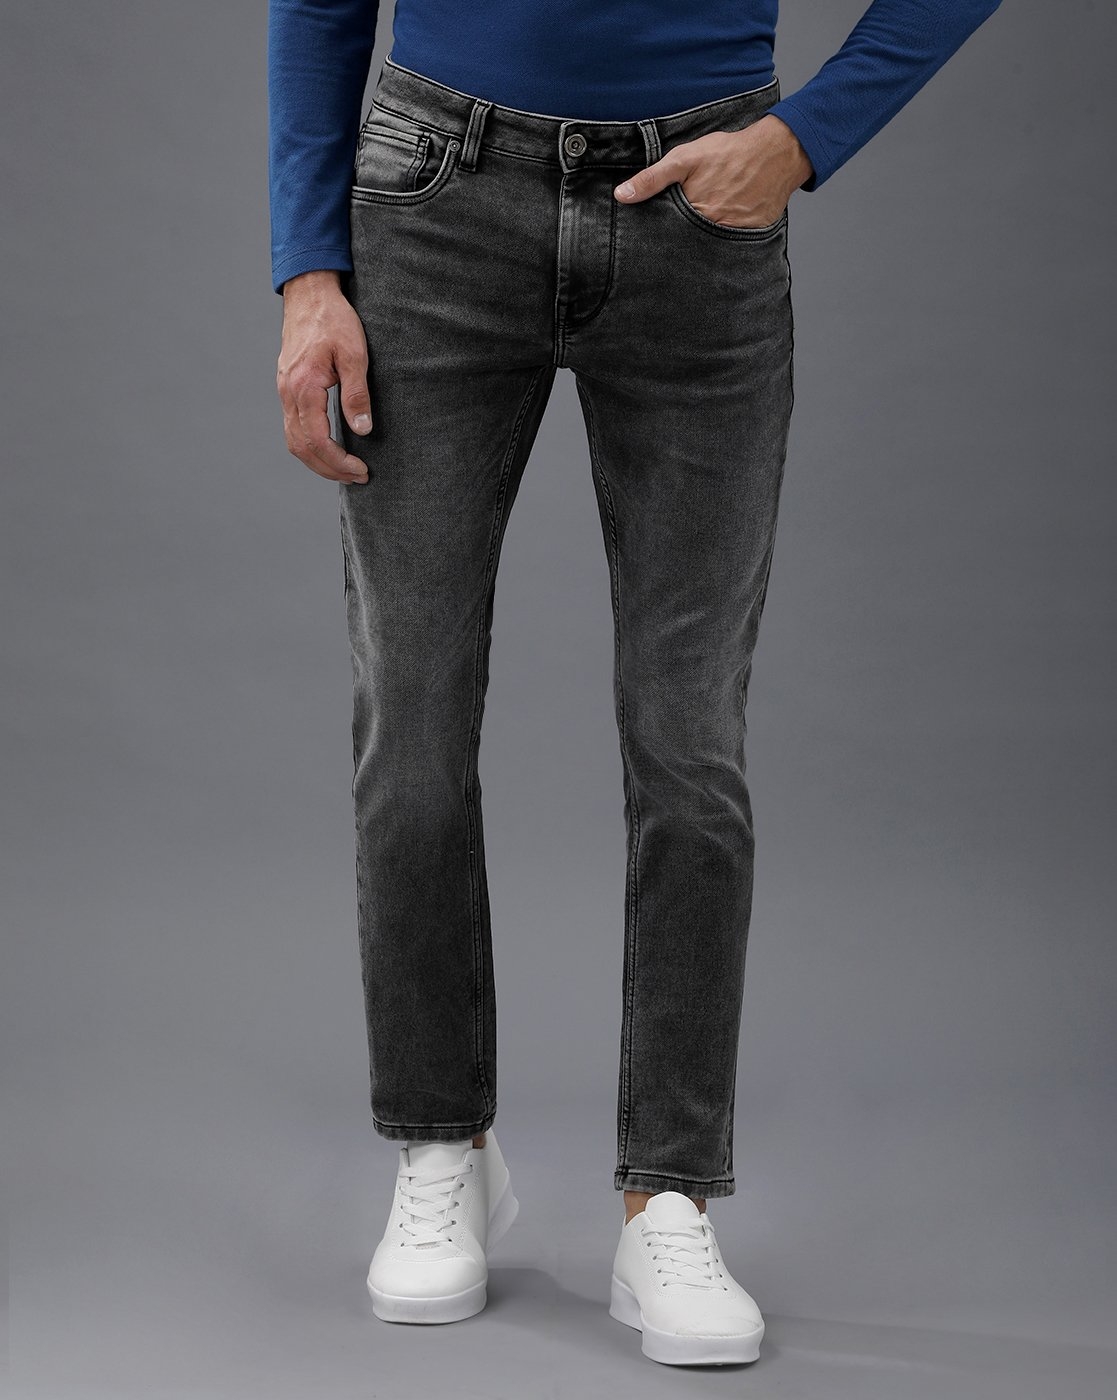 Voi Jeans | Men's Grey Casual Tapered Jeans ( VOJN1530 )